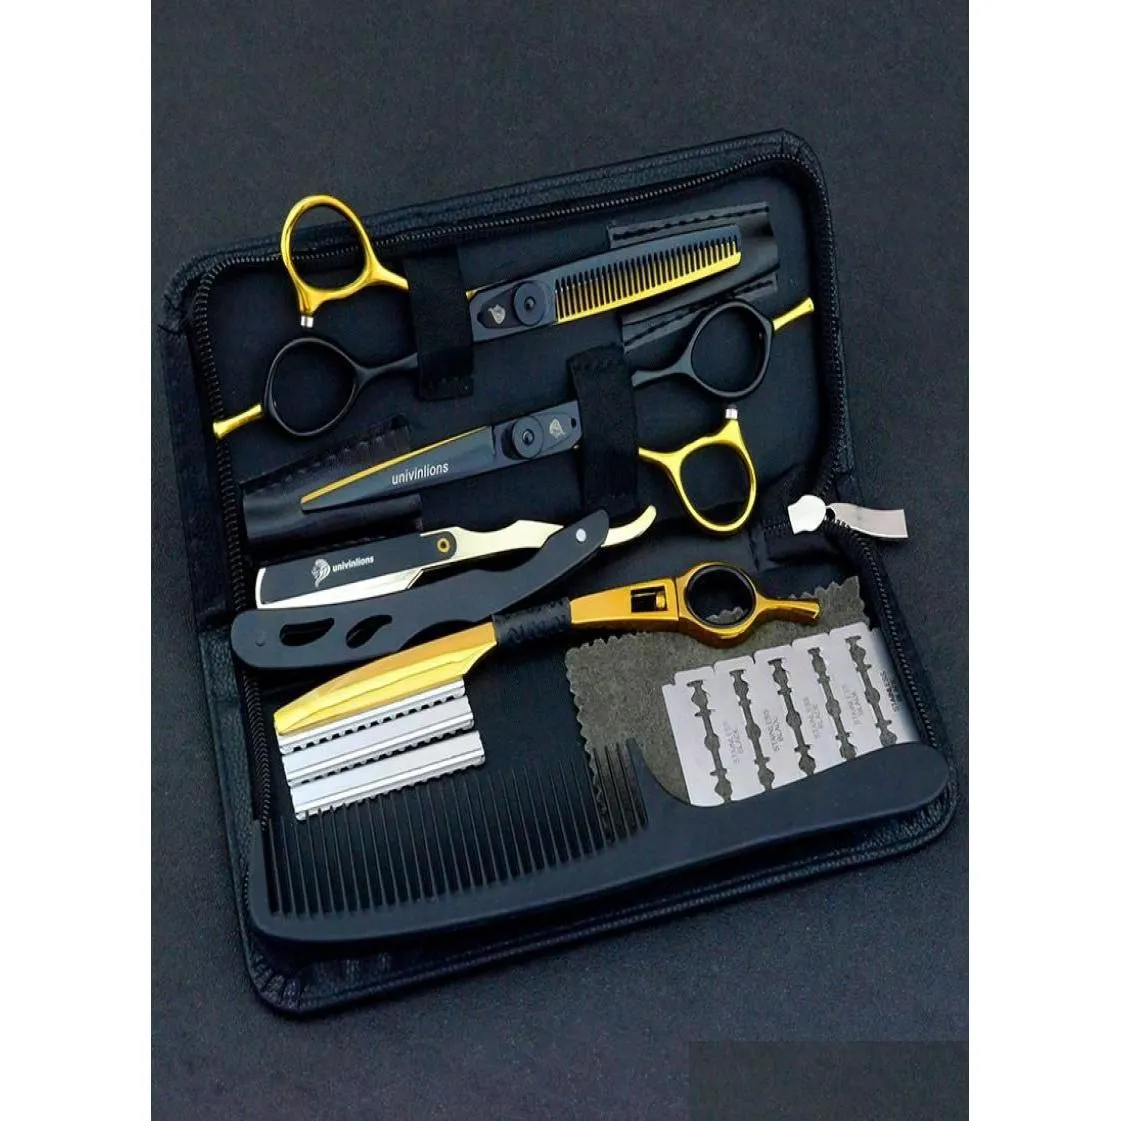 scissor shears scissor platform scissors stylist high quality beauty health styling tools applianceshair scissors 5560 quot sa3204322